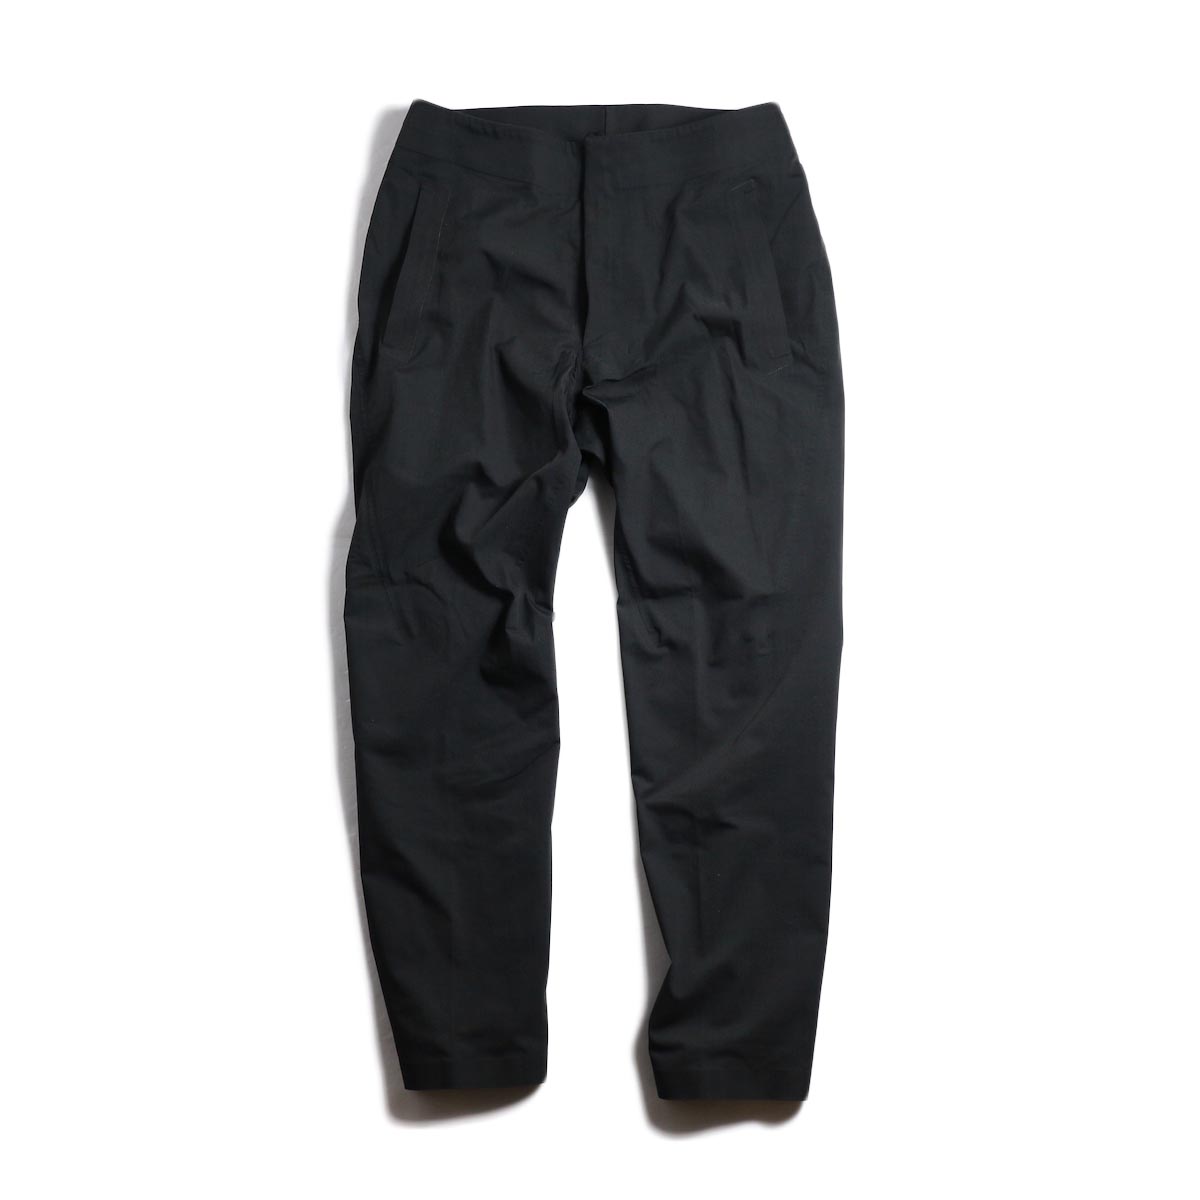 DESCENTE ALLTERAIN / Boa Long Pants Tapered Fit -Black